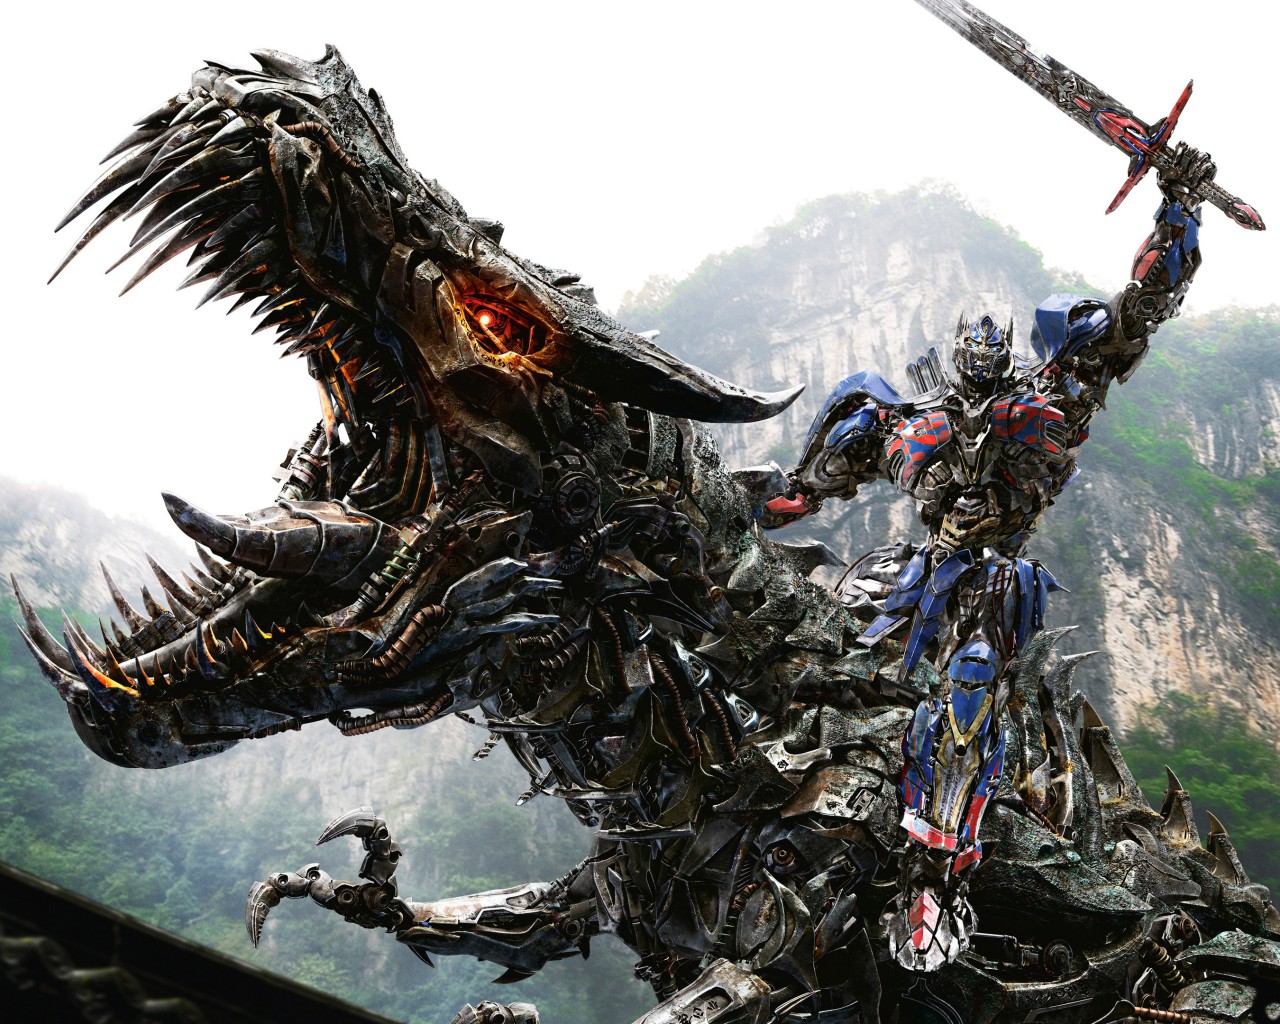 Transformers 4 IMAX Poster - wallpaper.